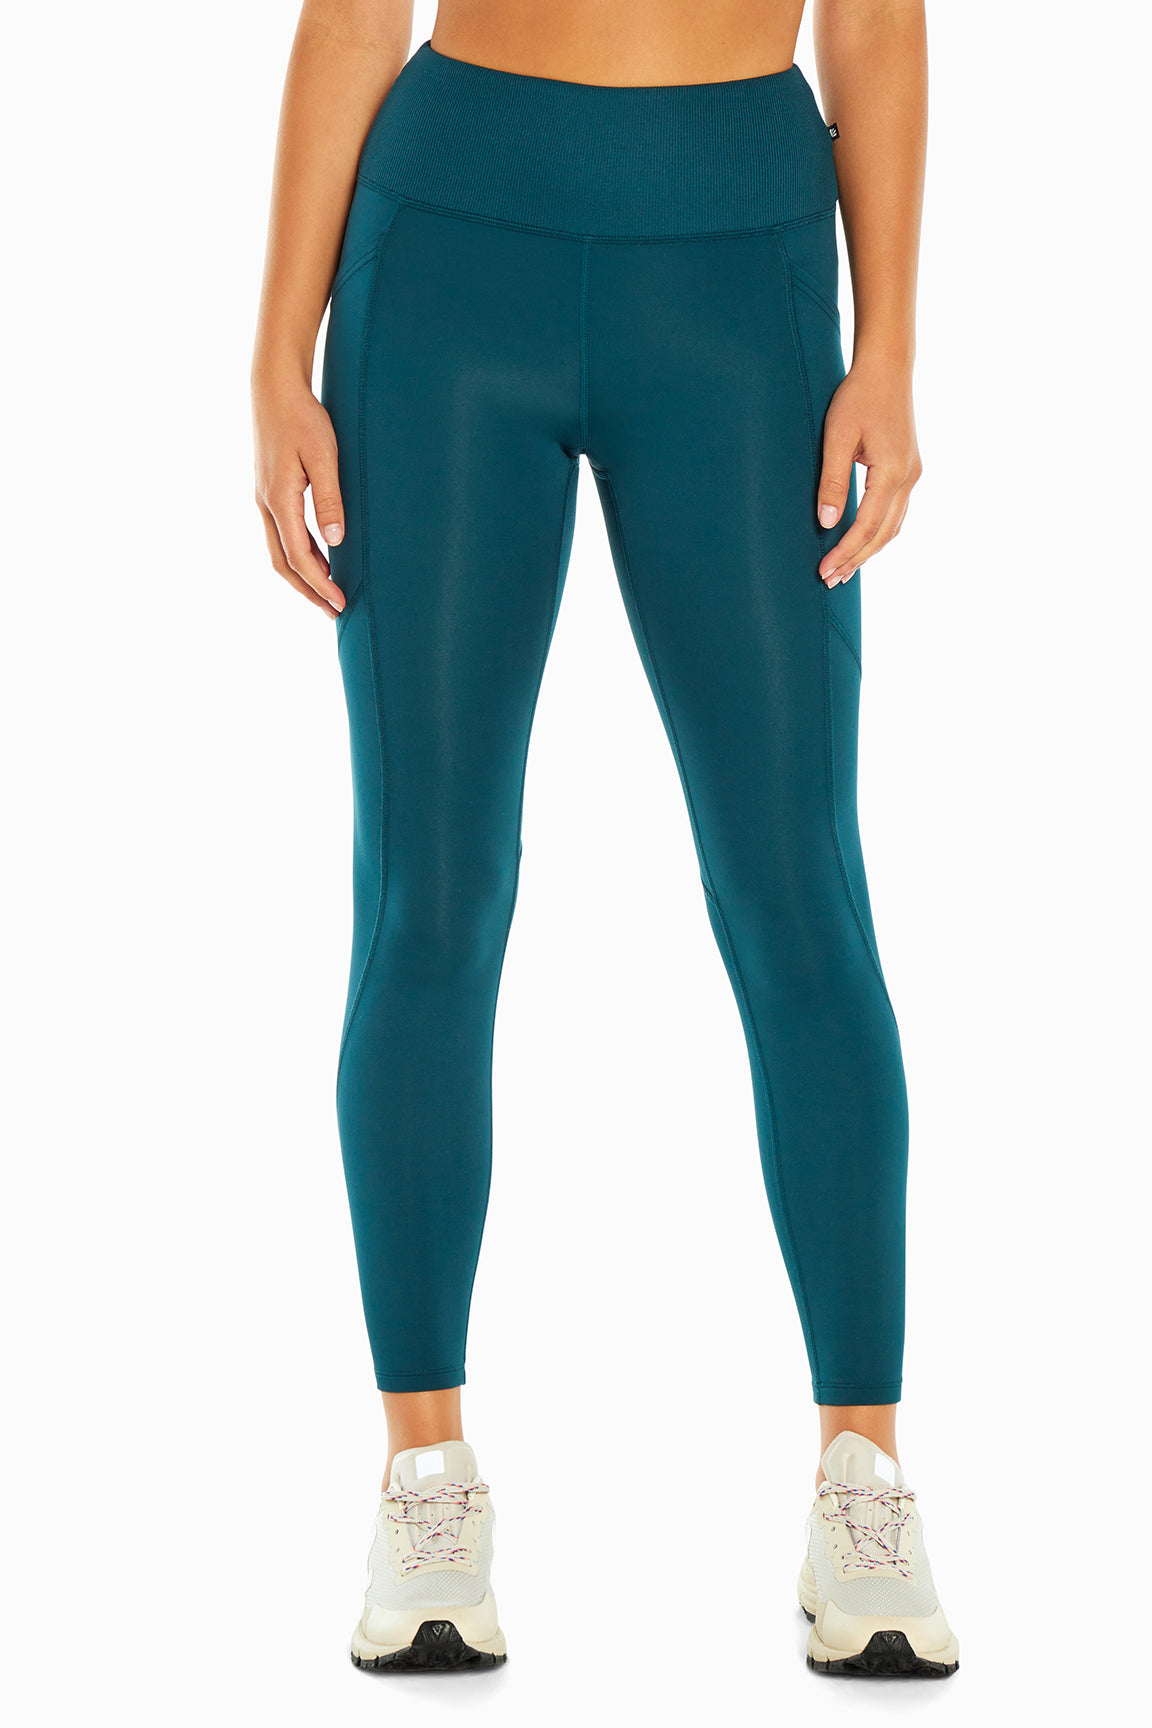 Marika Tek Balance Plus Dry Wik Women's Pants and Leggings (Size 1X) |  Groupon